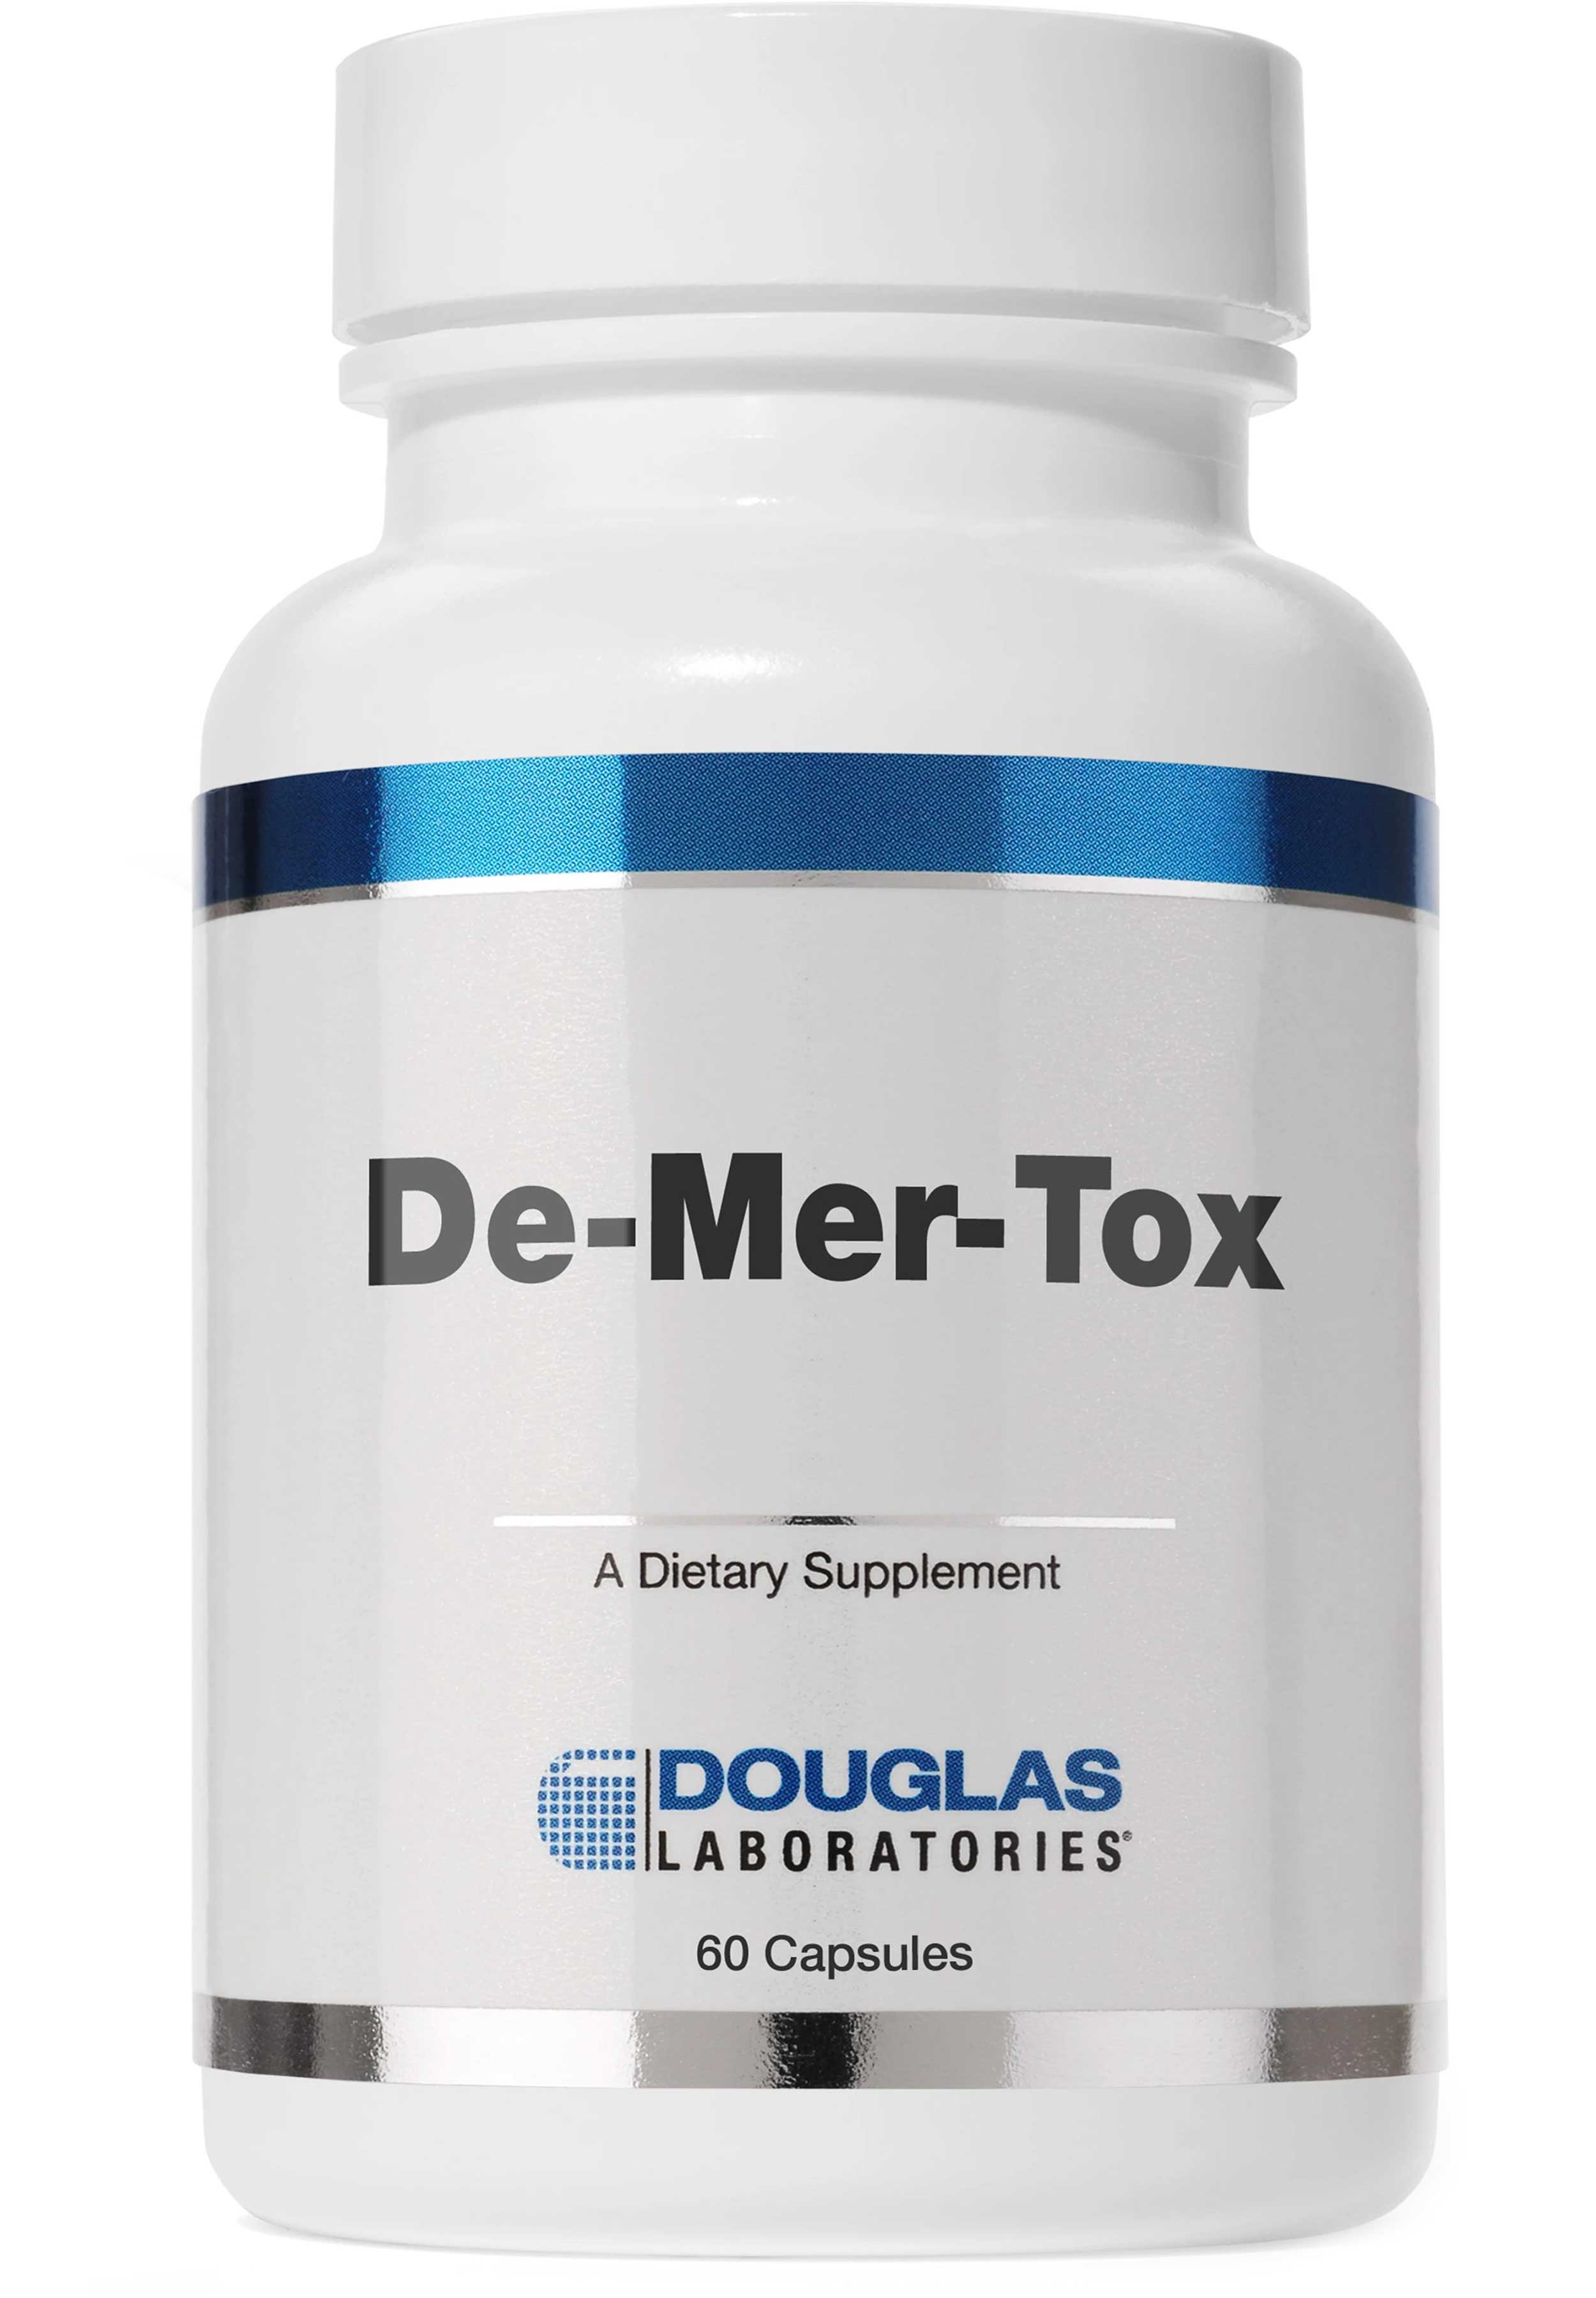 Douglas Laboratories De-Mer-Tox